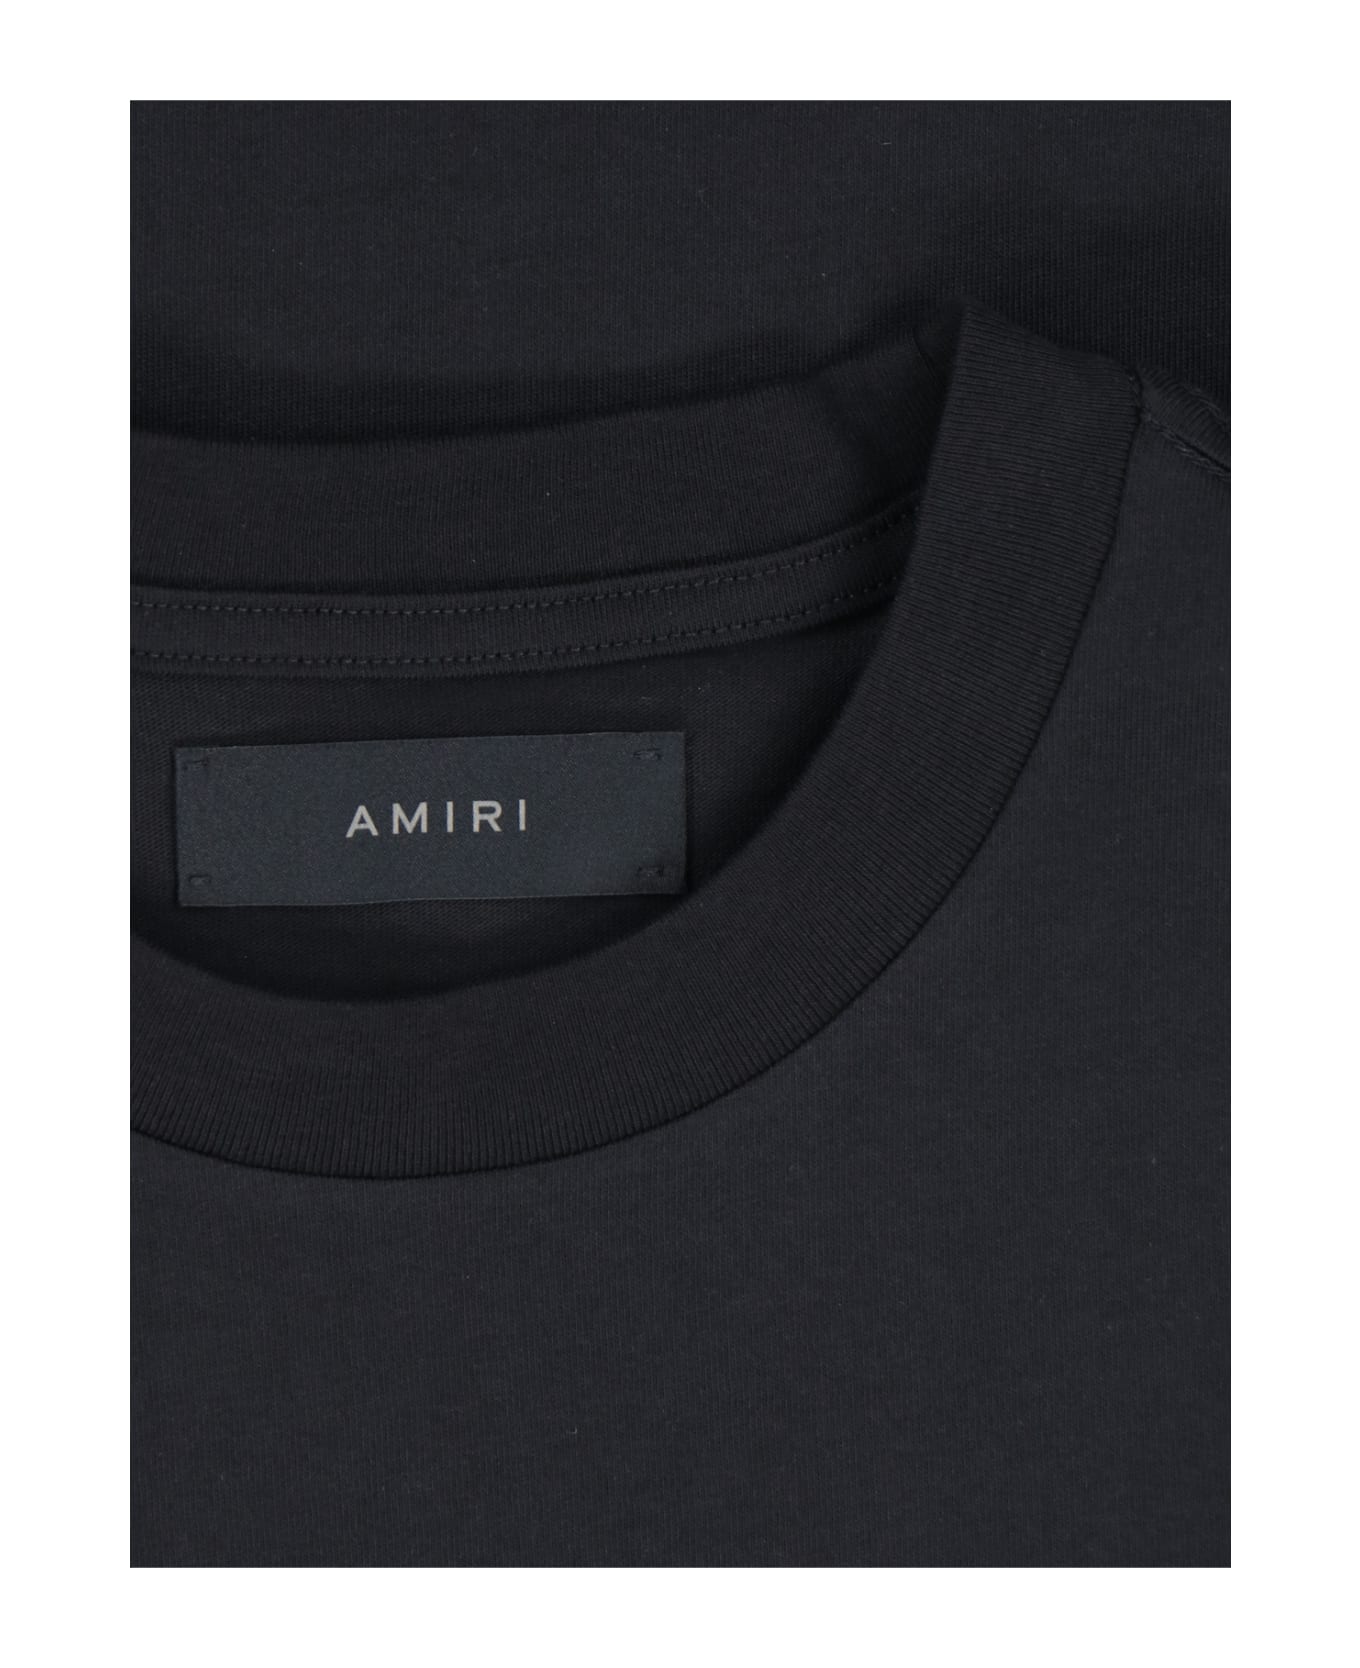 AMIRI Back Print T-shirt - Black  